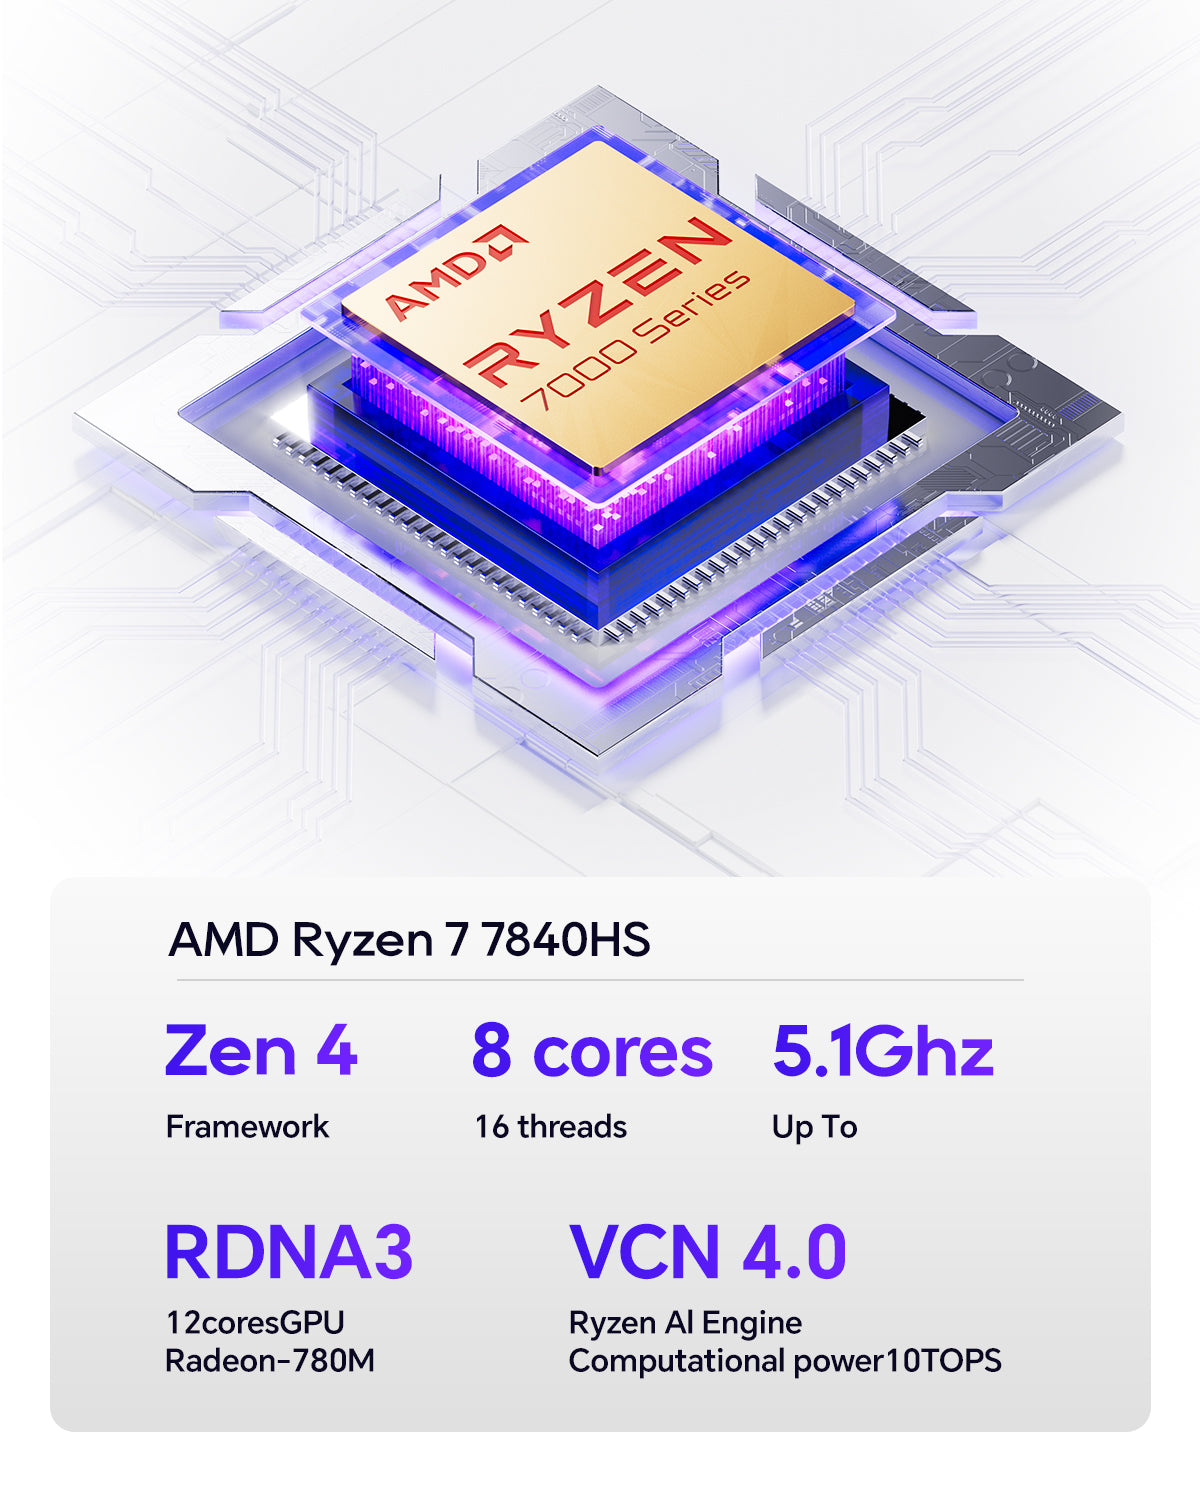 AOOSTAR GEM12 AMD Ryzen 7 7840HS Mini PC with 16/32G  DDR5 RAM 512G/1T PCle 4.0 SSD WIN 11 PRO/ 2* NVME/Oculink/2*2.5G LAN (Non-screened version)